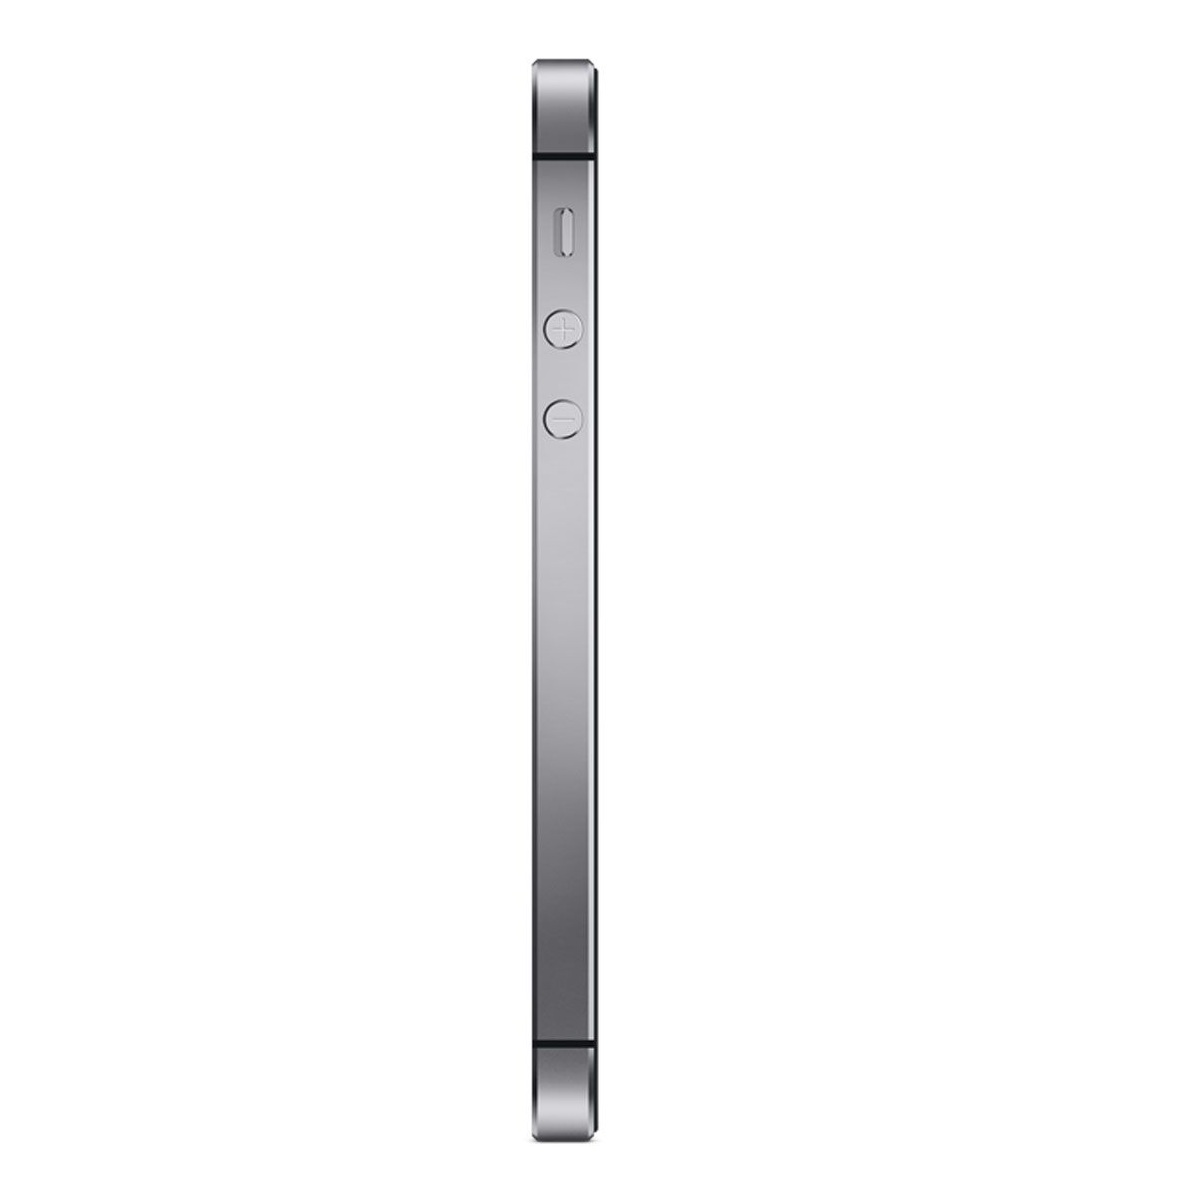 Смартфон Apple iPhone 5S 16Gb Space Grey (A1457/EUR)